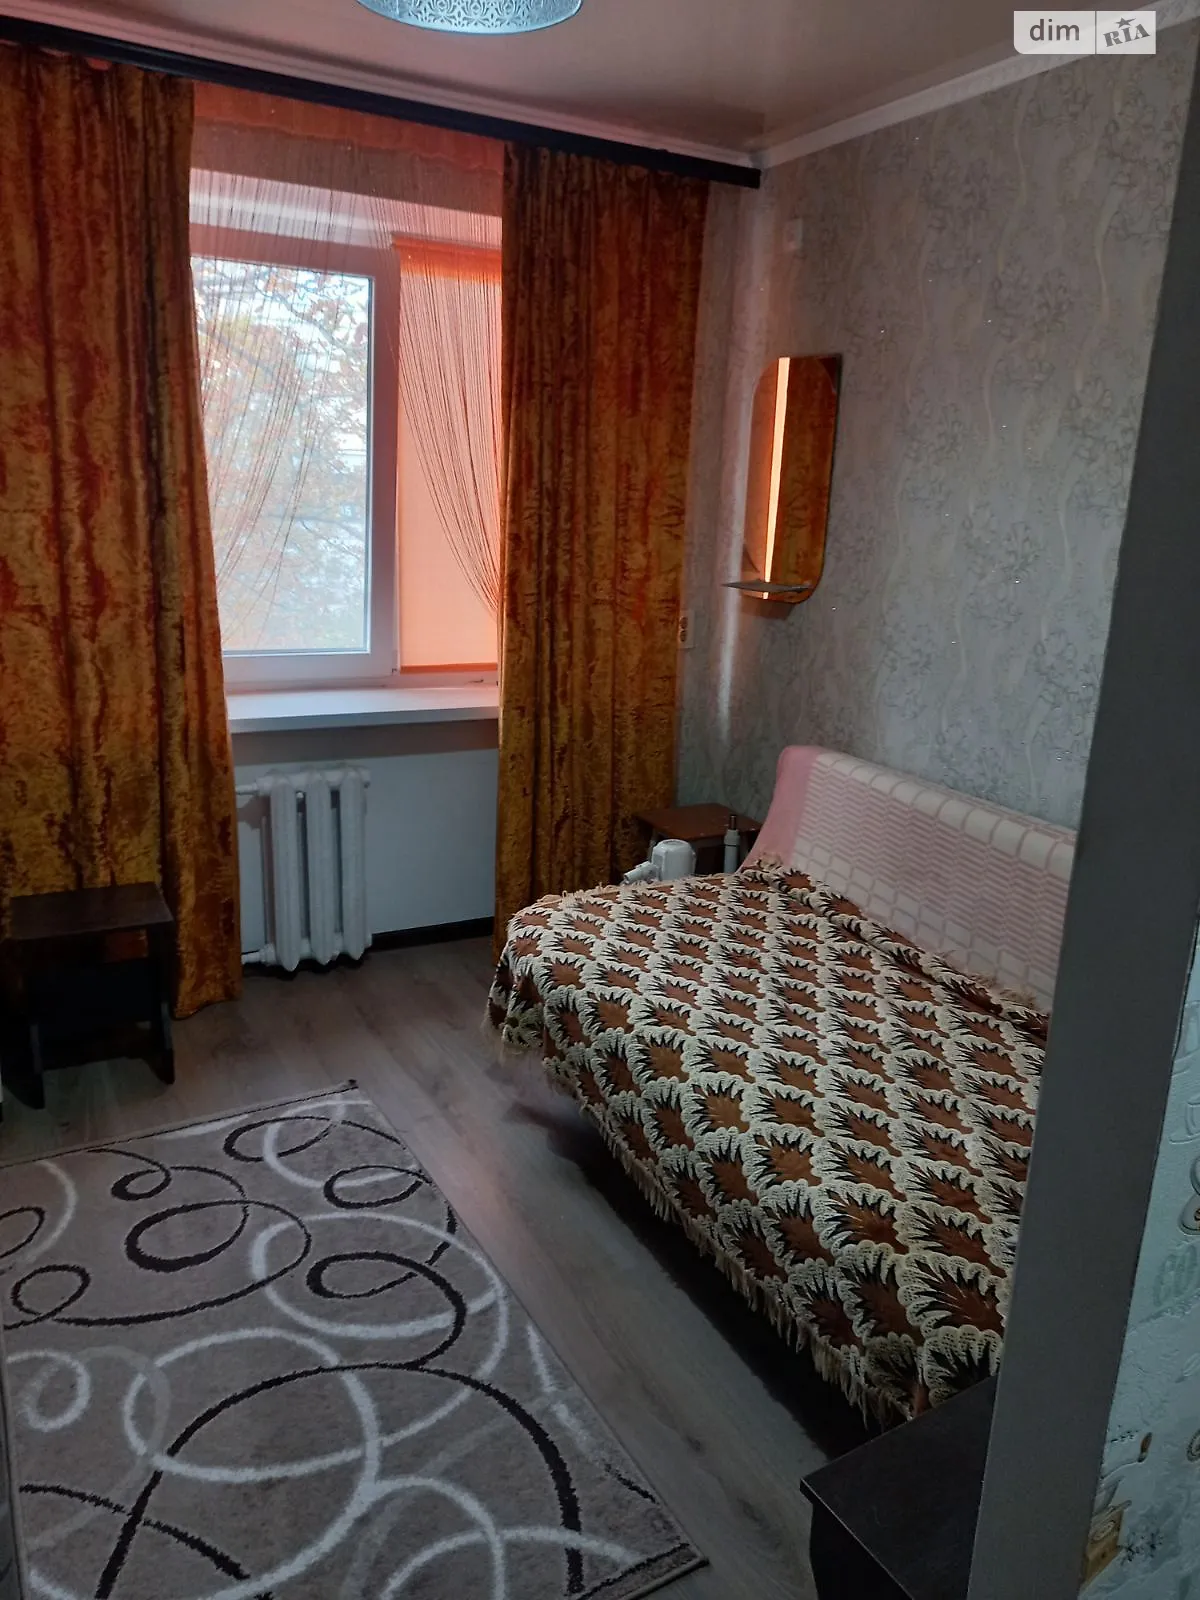 Продается комната 13 кв. м в Черноморске, цена: 11500 $ - фото 1